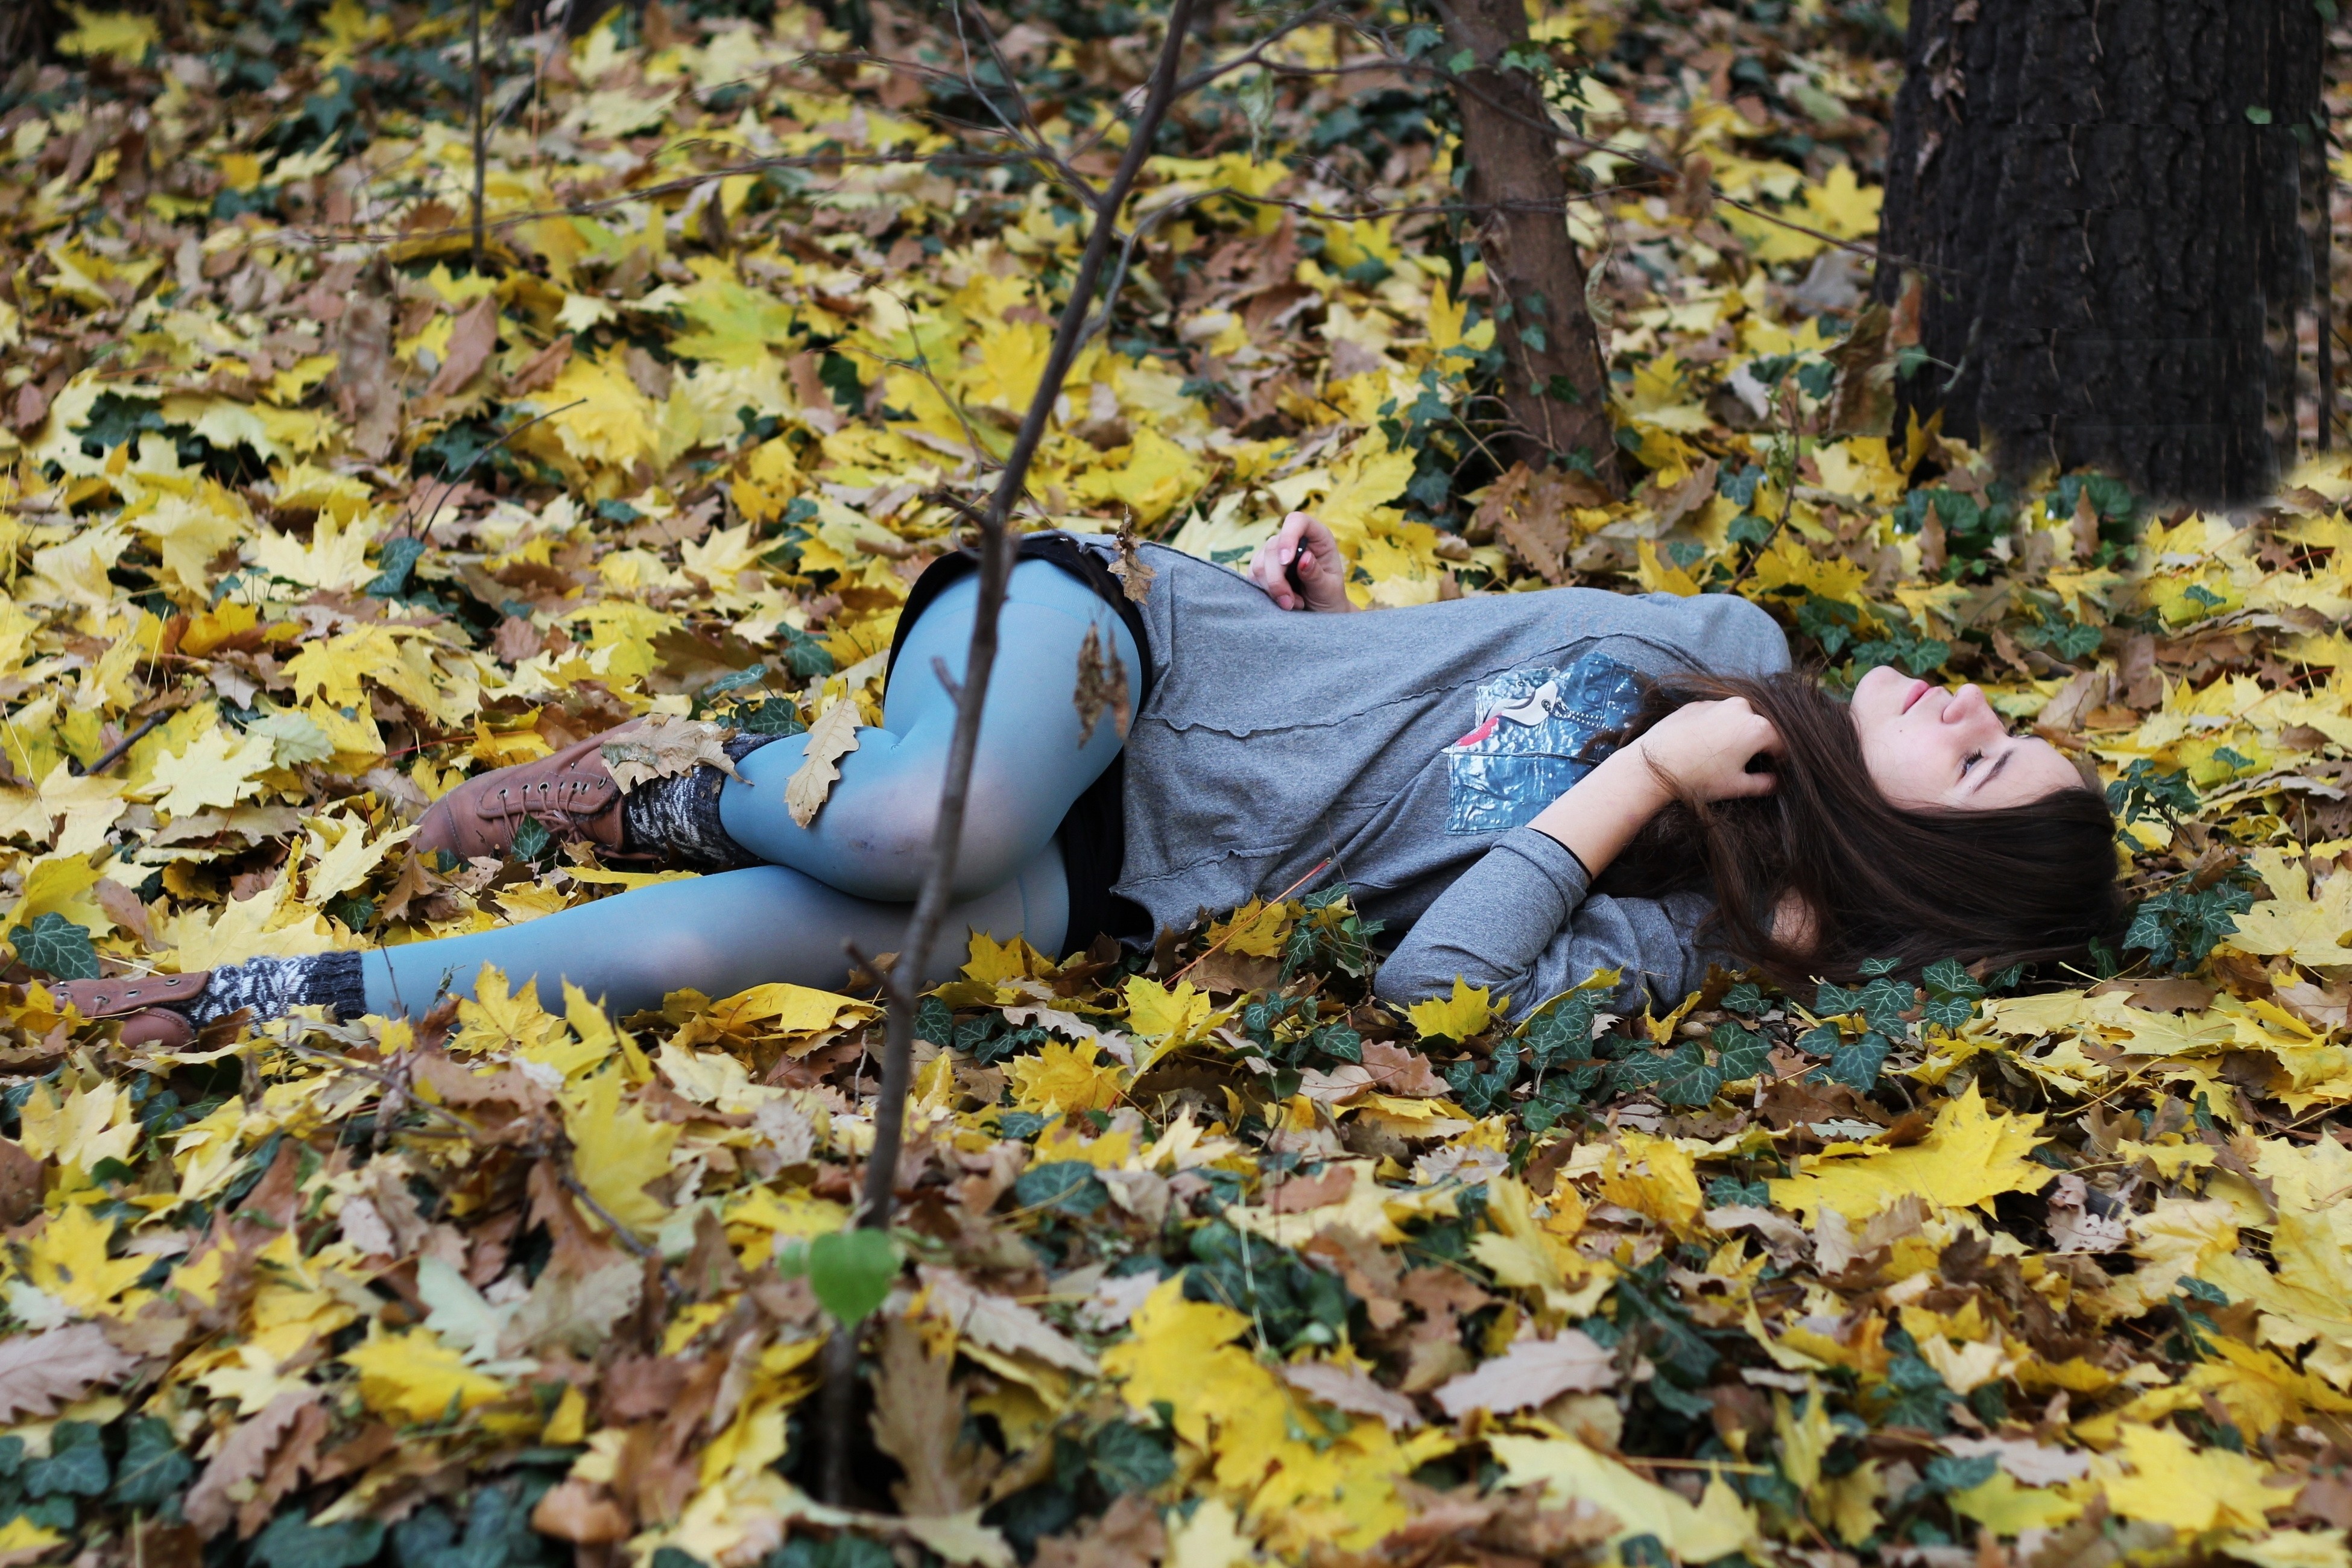 People 3900x2600 women brunette women outdoors fallen leaves leaves legs together outdoors lying down model pantyhose fall